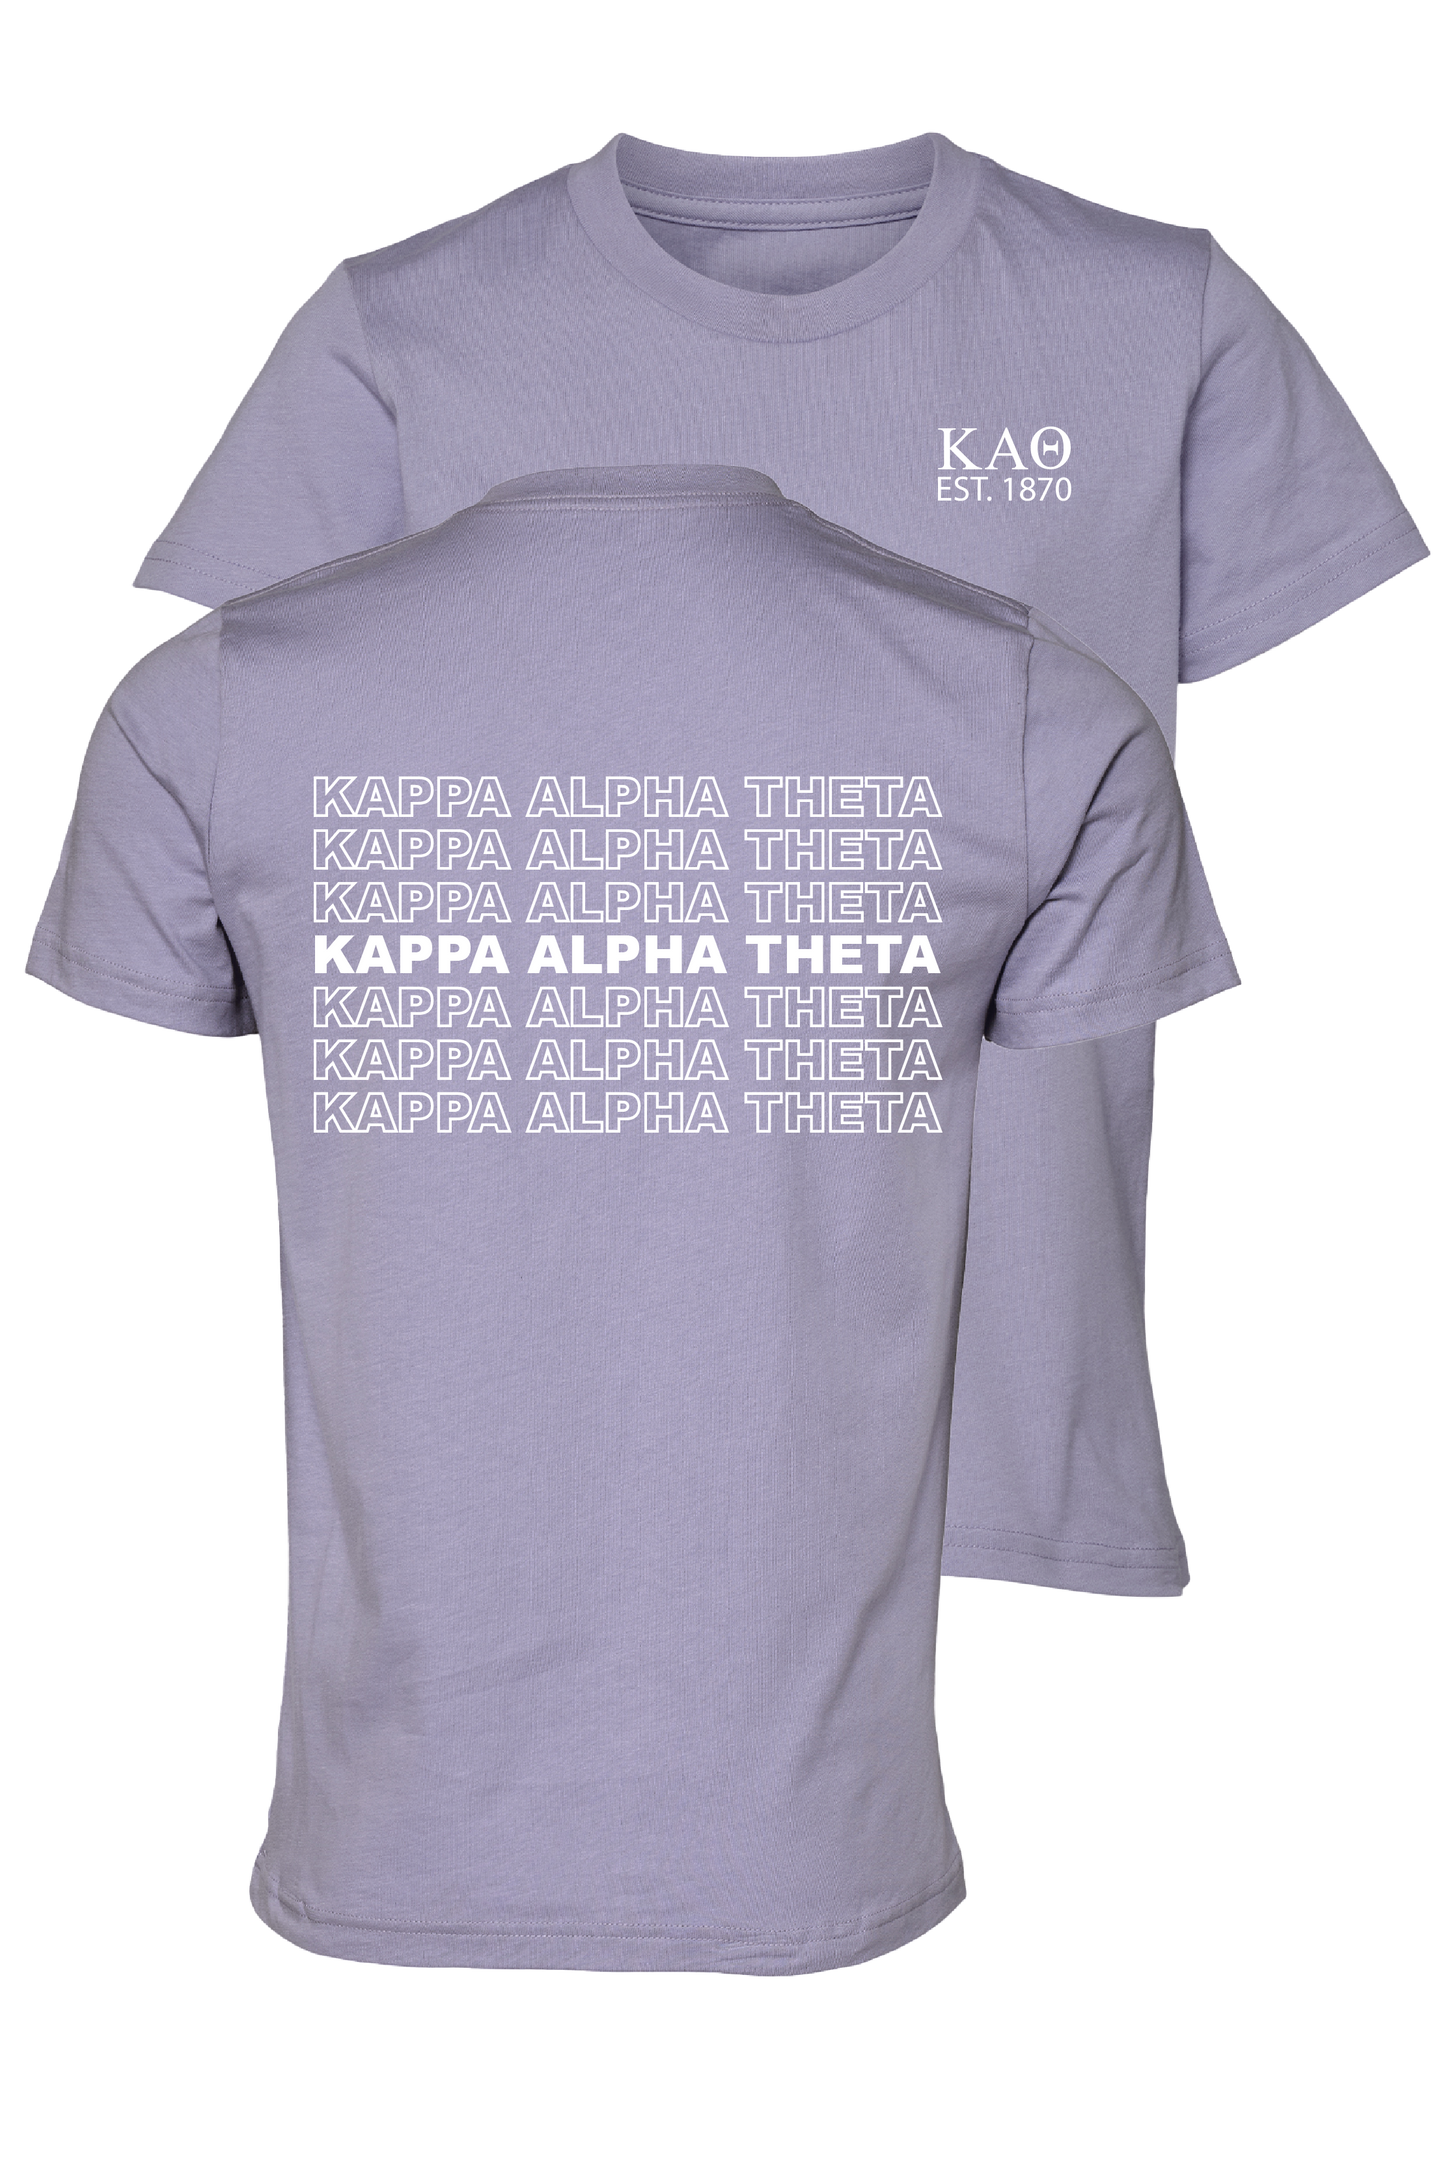 Kappa Alpha Theta Repeating Name Short Sleeve T-Shirts